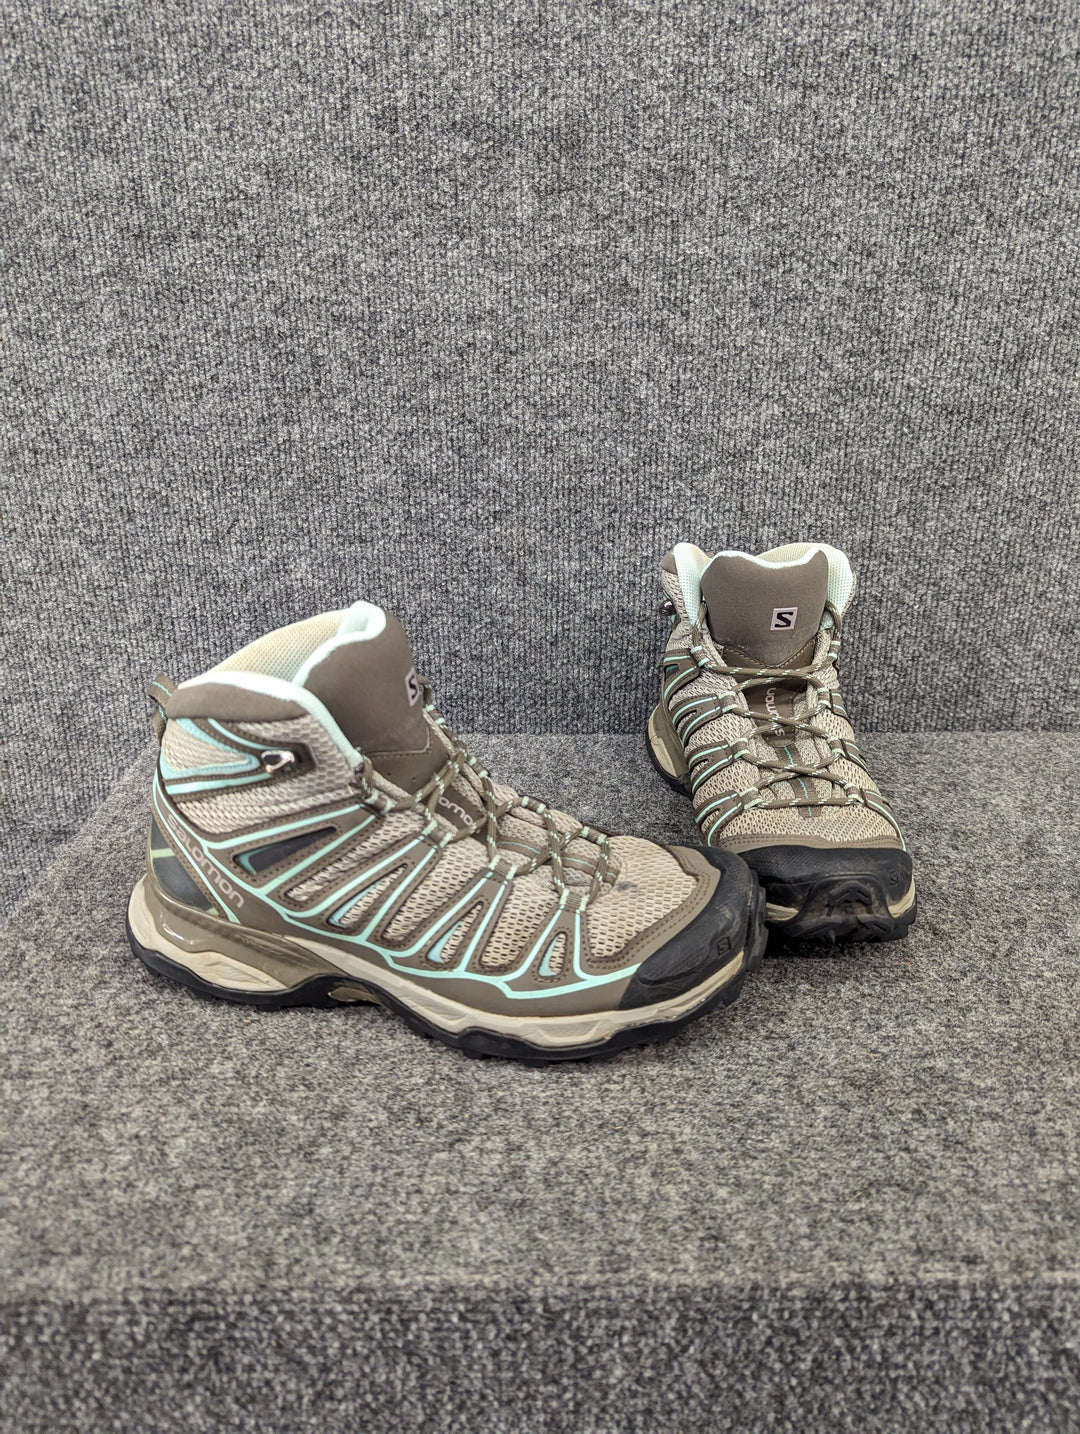 Salomon Size W8/39 Women's Hiking Boots